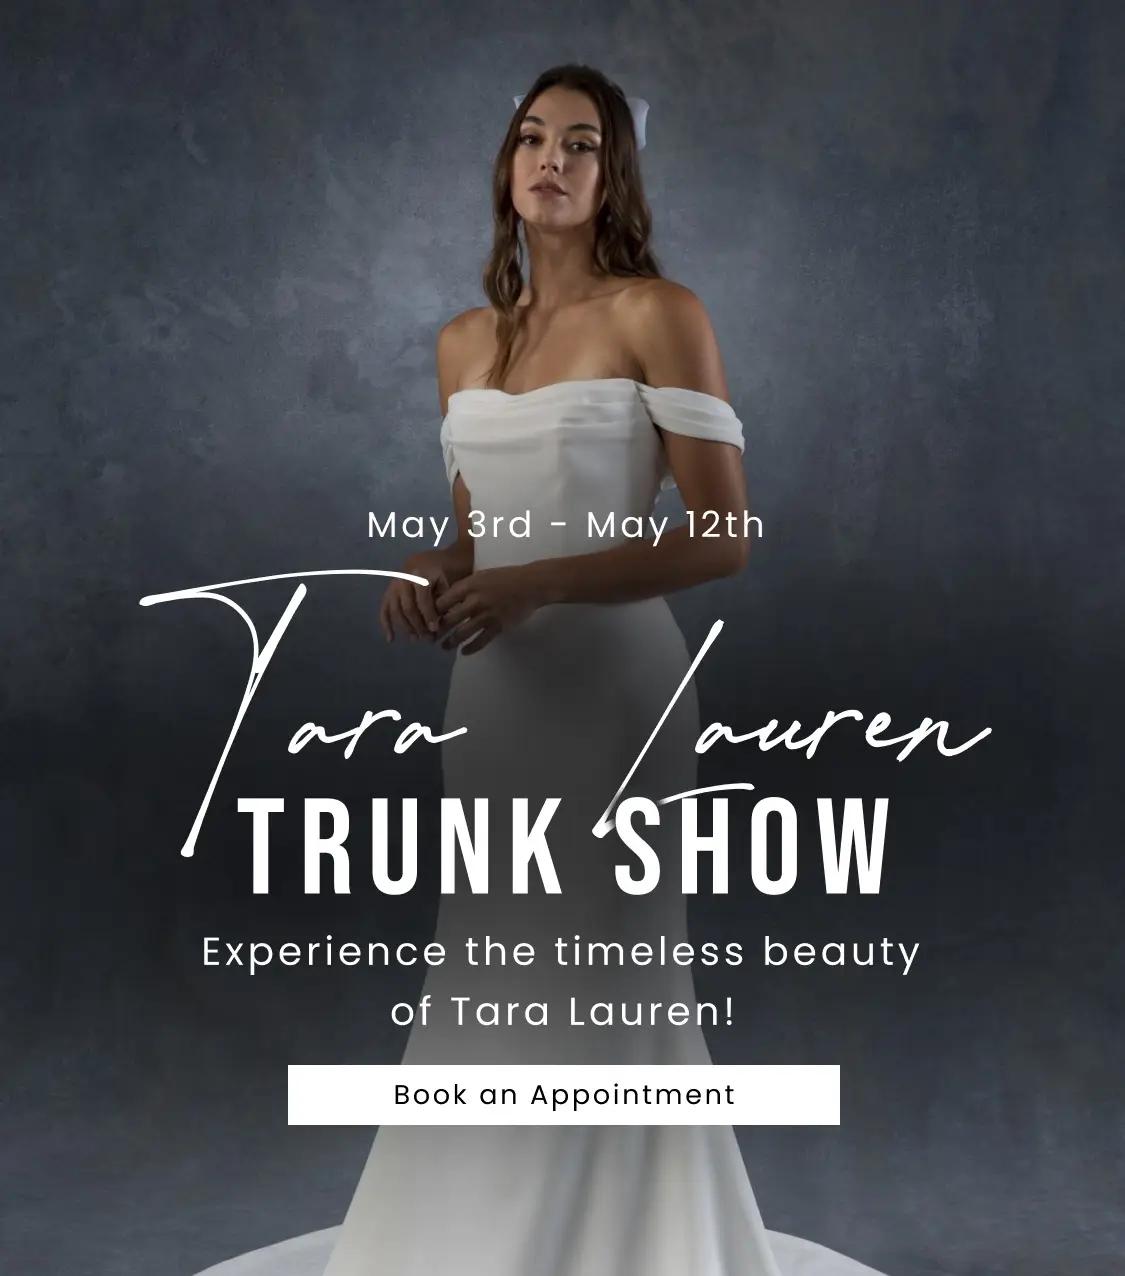 Tara Lauren Trunk Show mobile banner